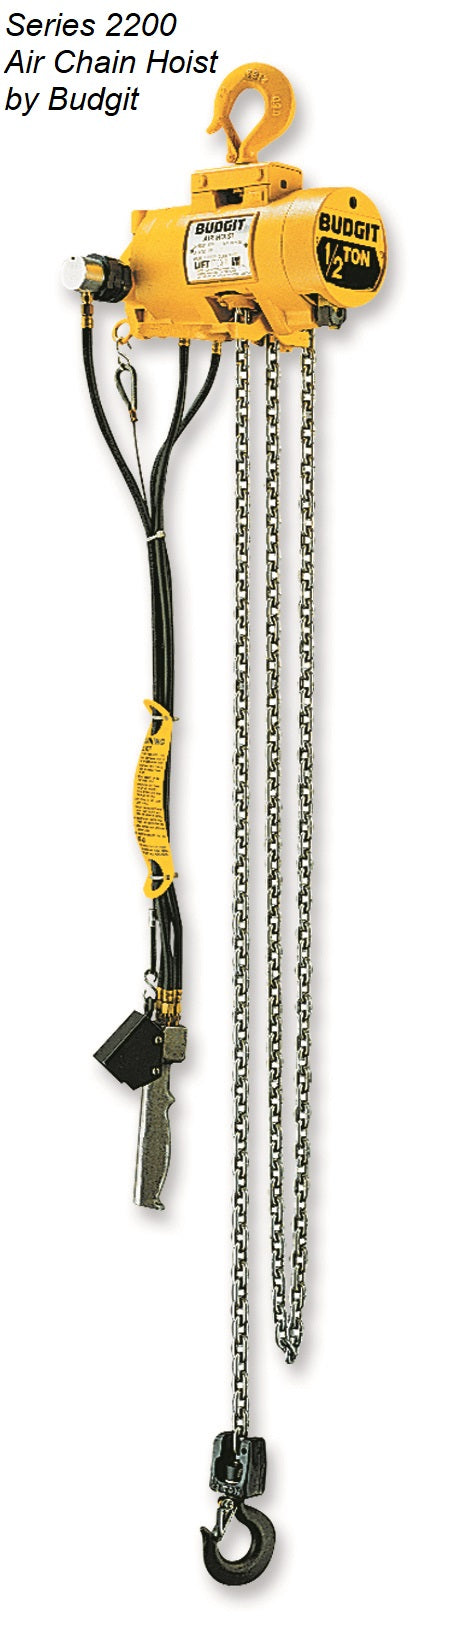 Chain Hoists by Budgit Hoist